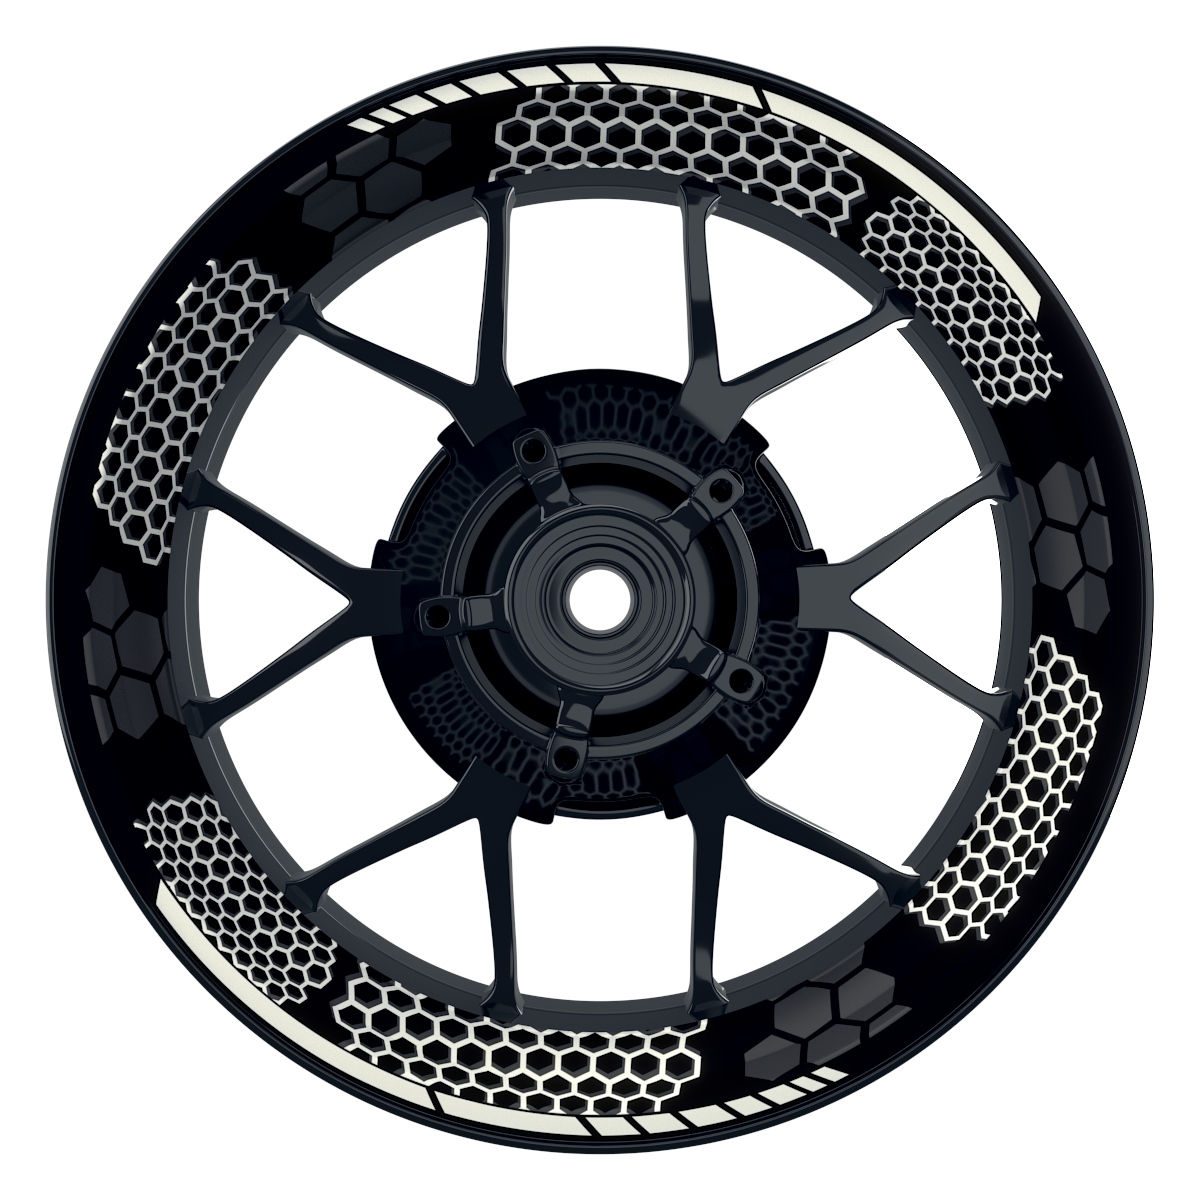 Hexagon schwarz neutral NEU weiss Wheelsticker Felgenaufkleber